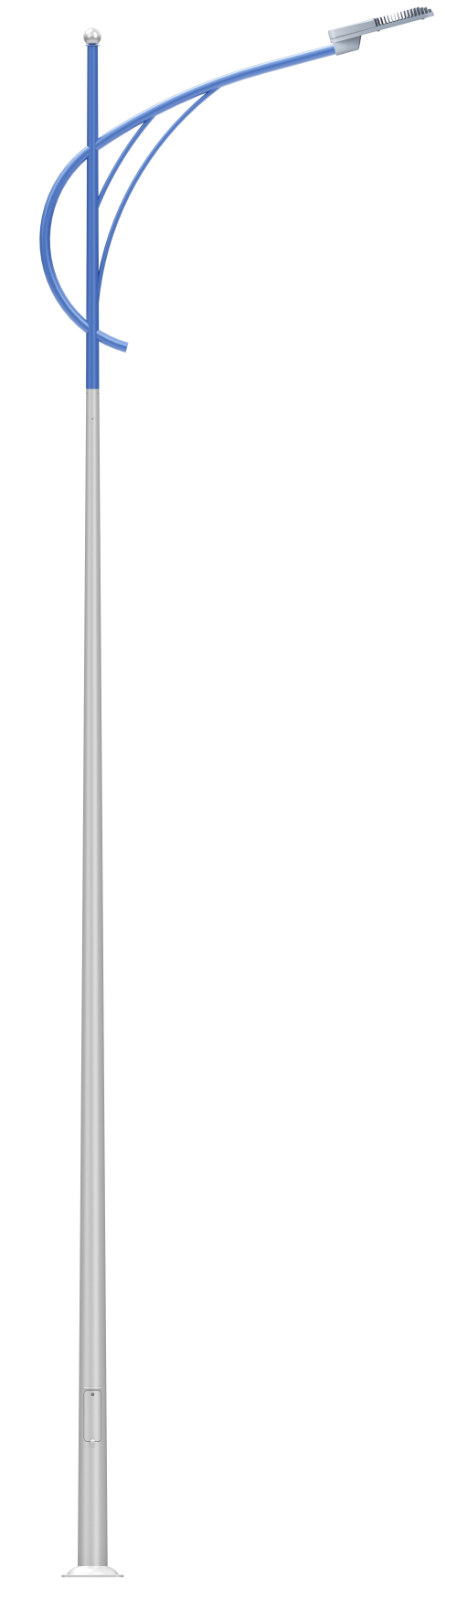 Lighting Pole LG15